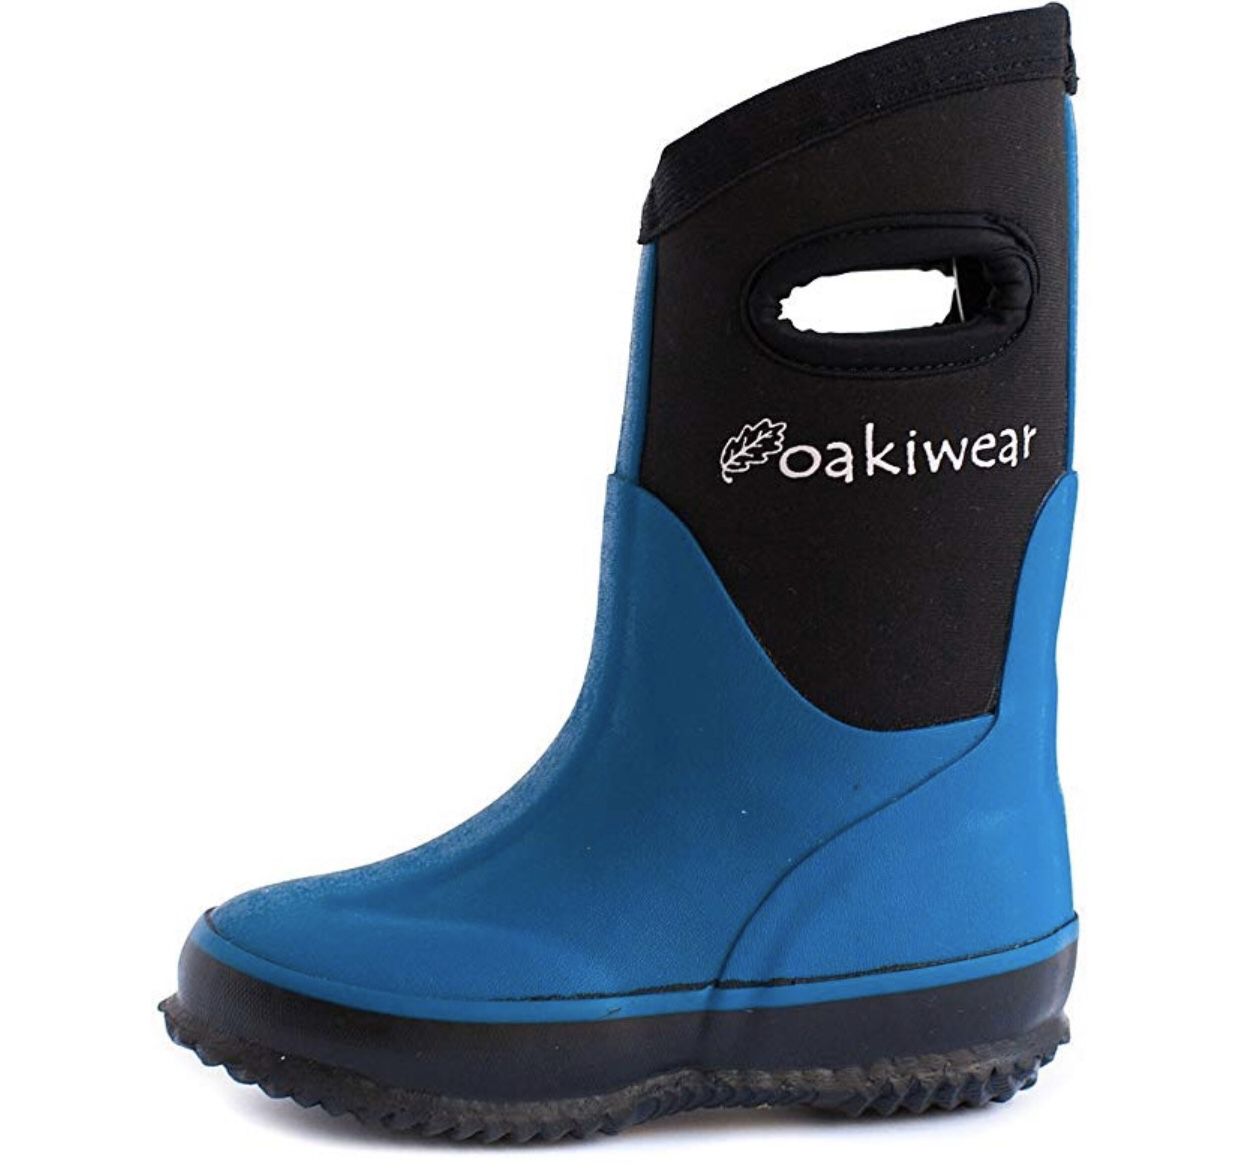 Oakiwear Brand New, Neoprene Rain Boots, Snow Boots, Celestial Blue, Toddler Size 8